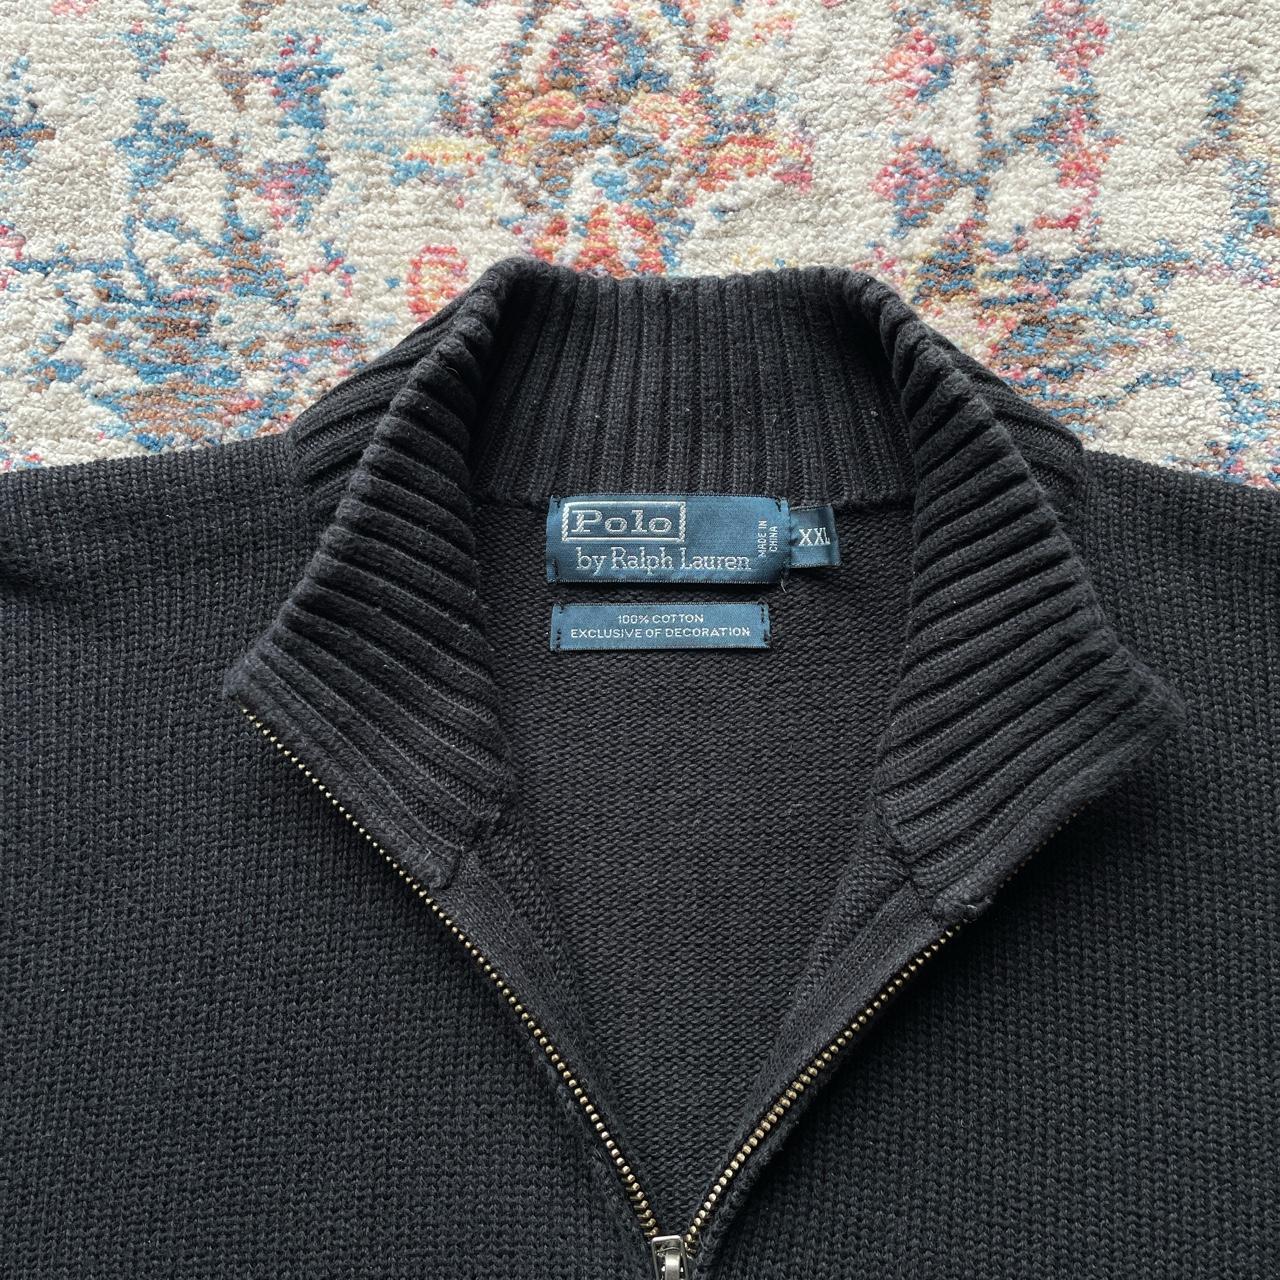 Vintage Ralph Lauren Black Knitted Jumper